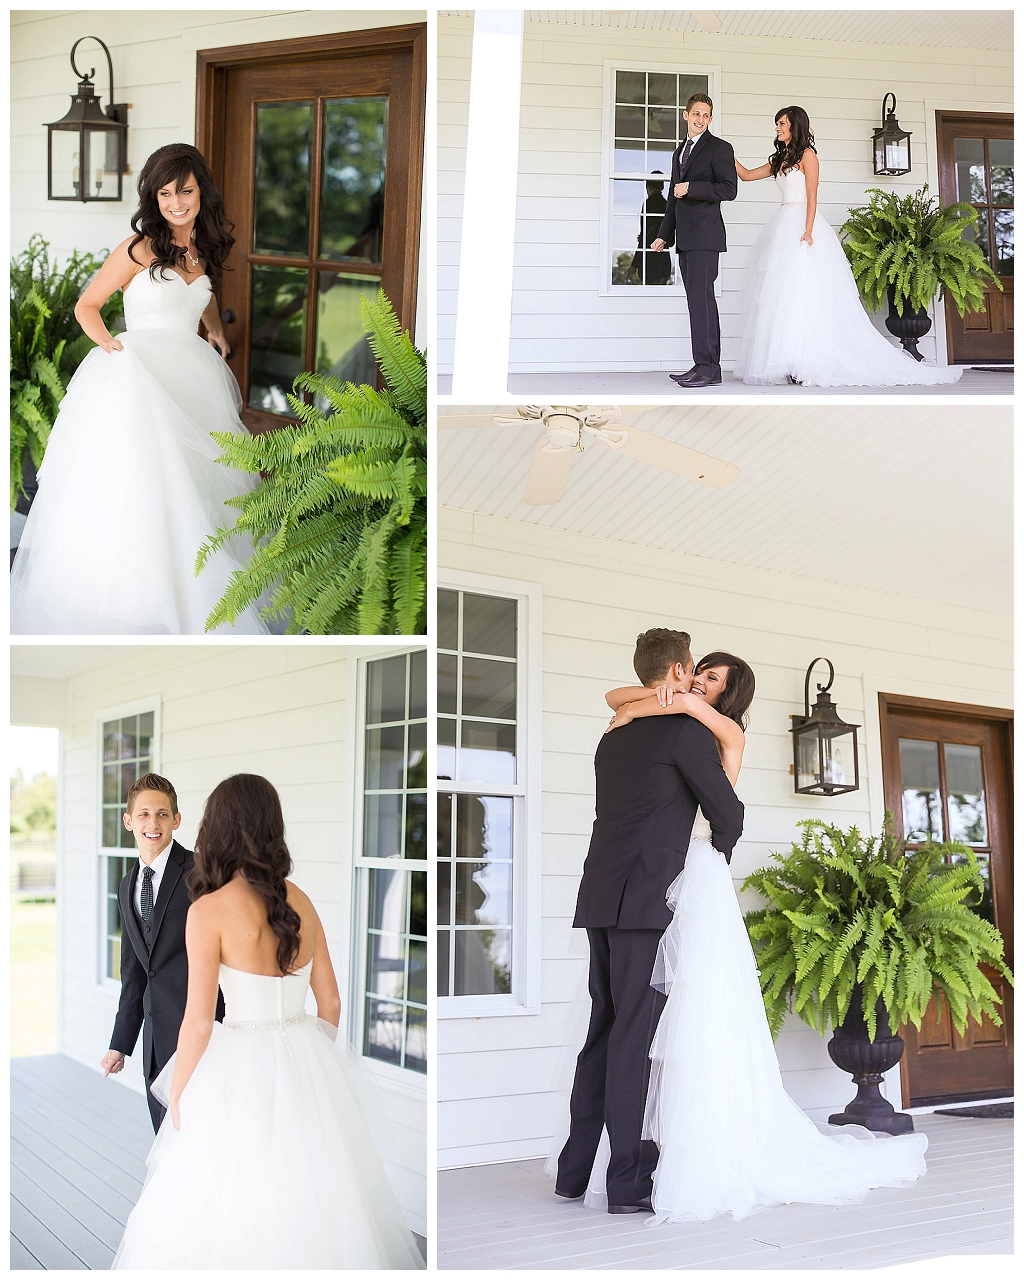 Lexington KY Wedding Photography - David & Cheri